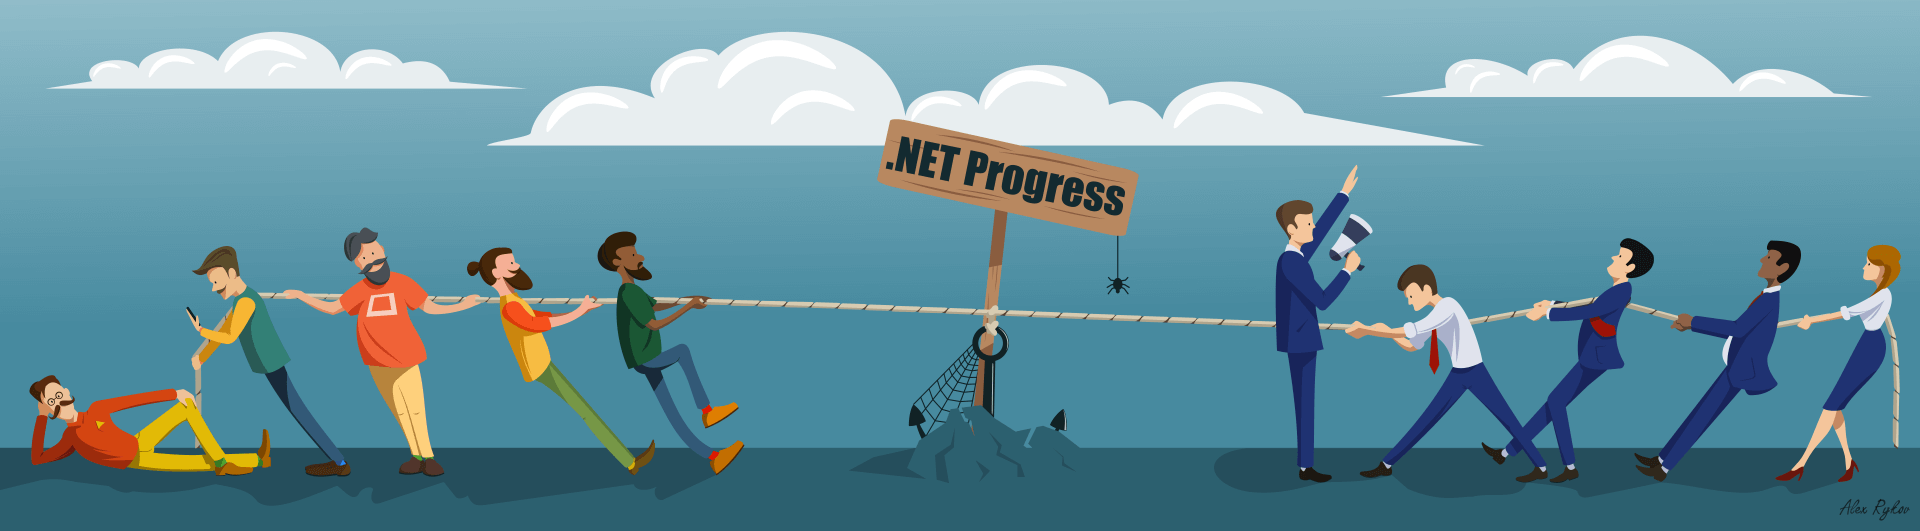 .NET Progress ca. 2012 - 2018